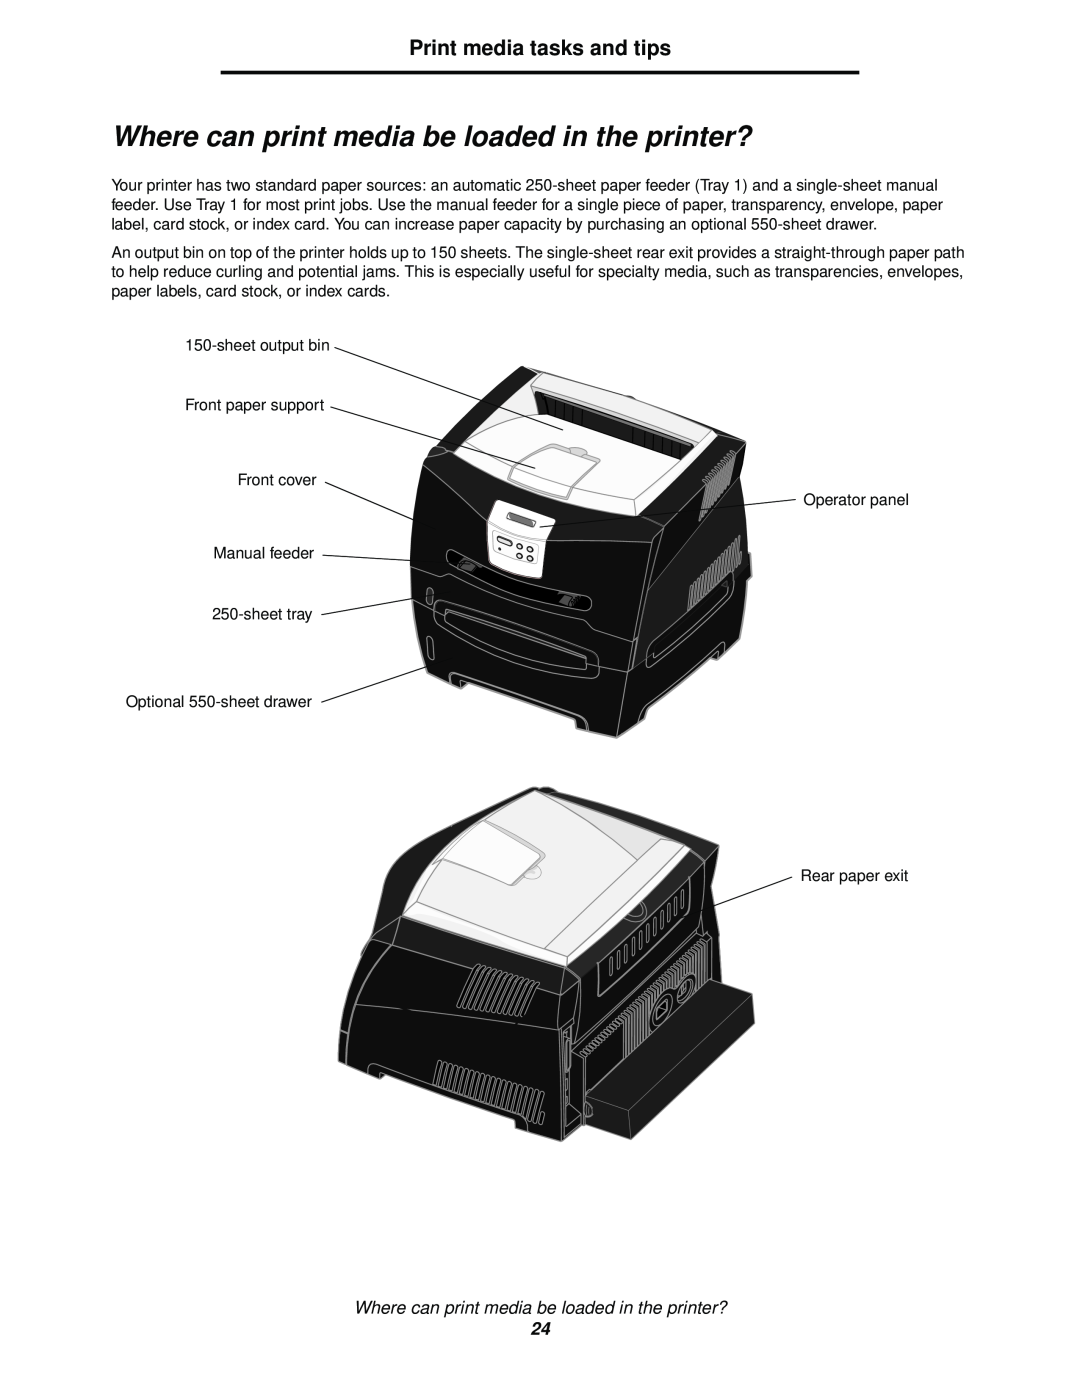 Lexmark 342n, 340 manual Where can print media be loaded in the printer?, Print media tasks and tips 